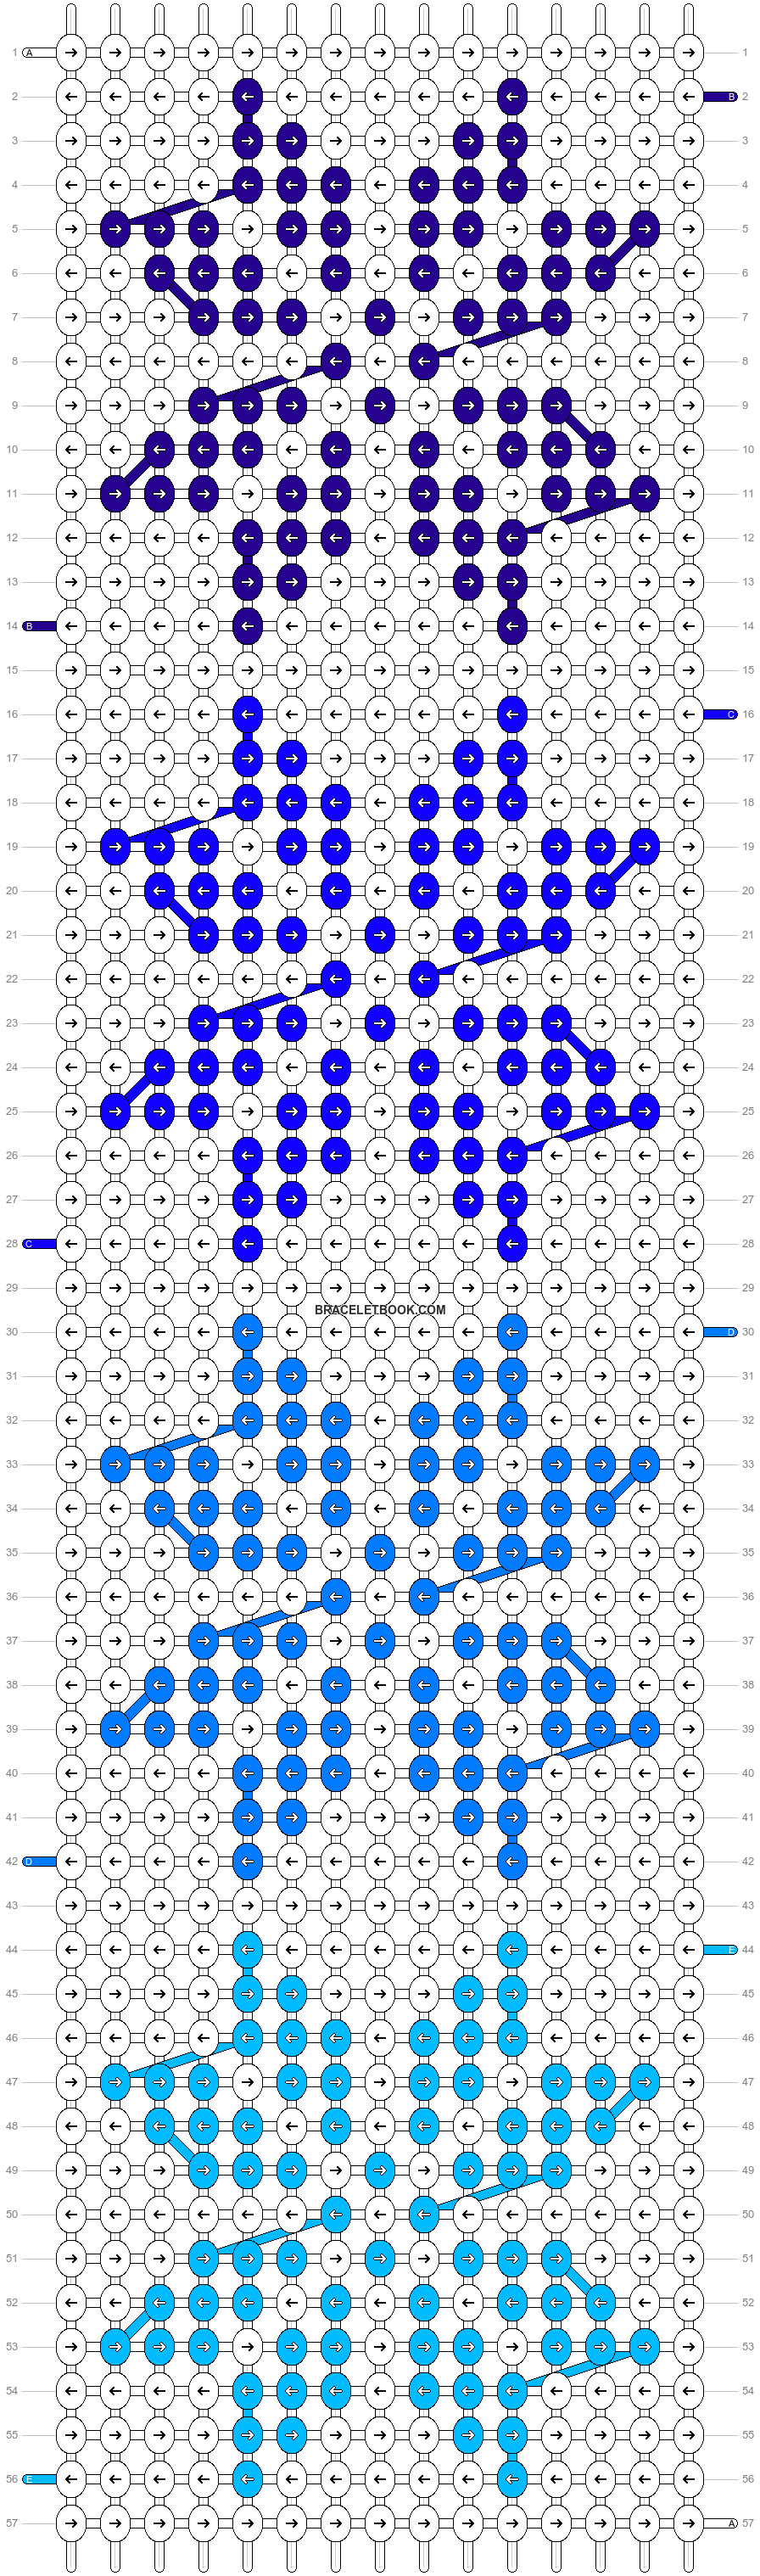 Alpha pattern #48750 pattern